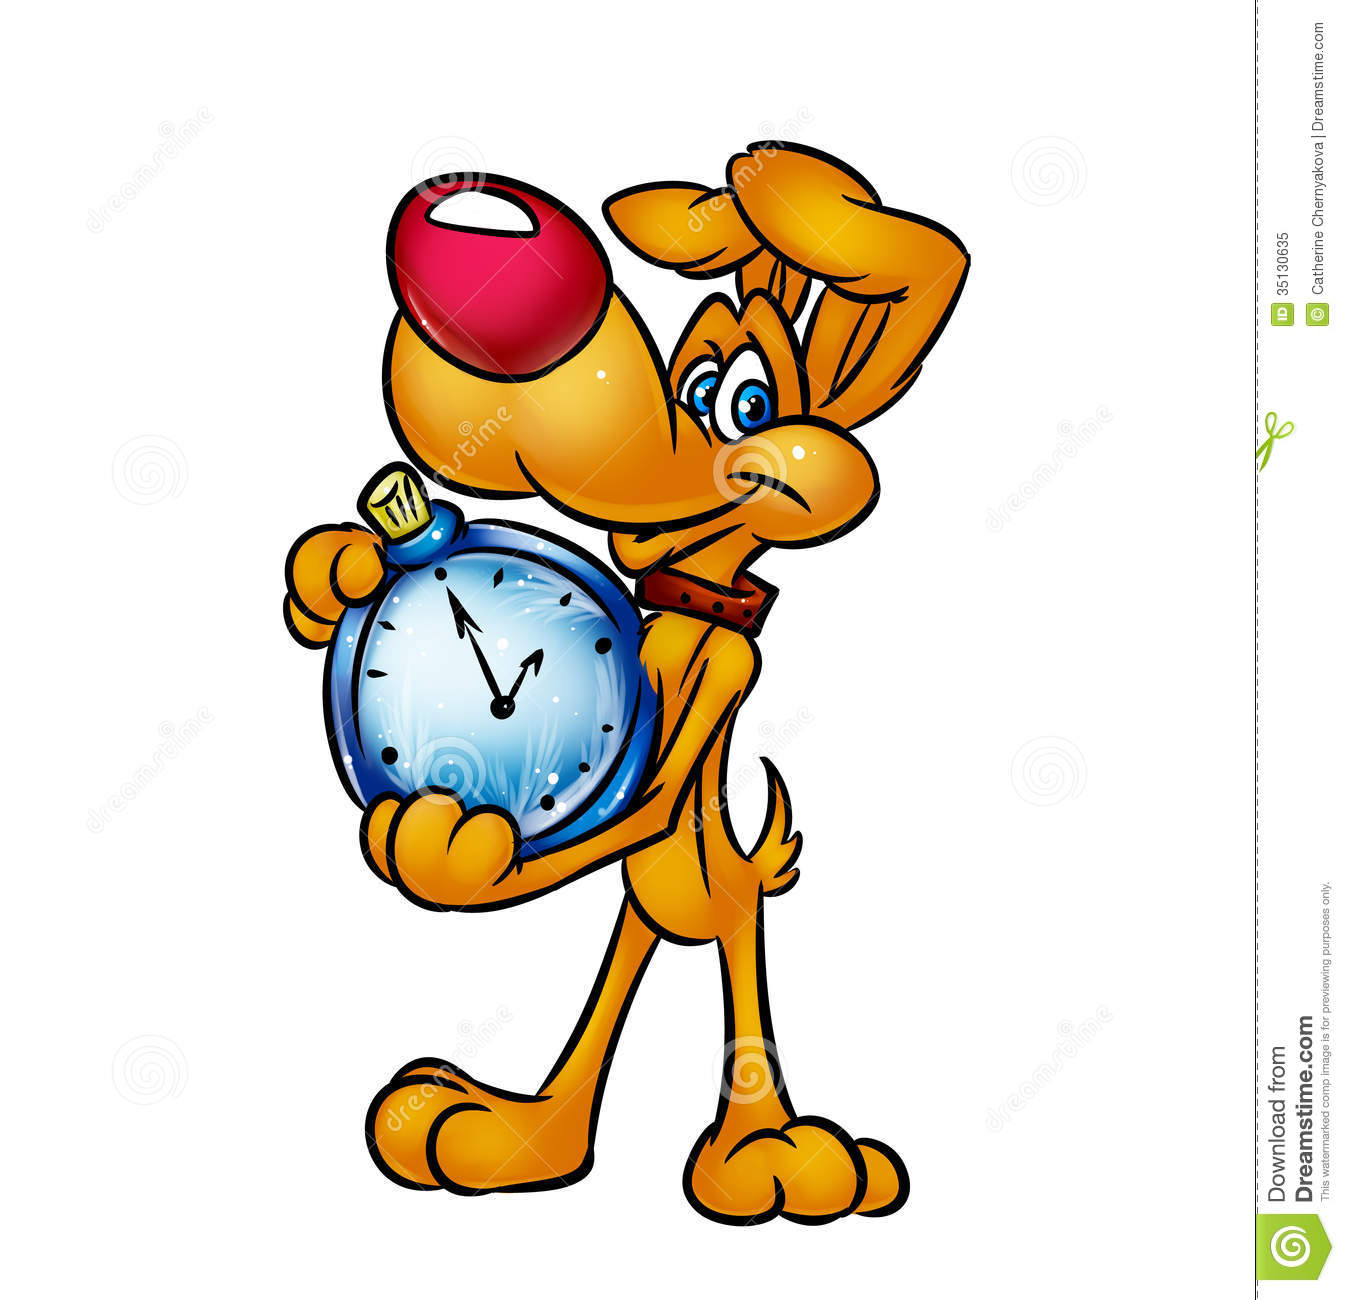 Royalty Free Stock Photo  Dog New Year Clock  Image  35130635